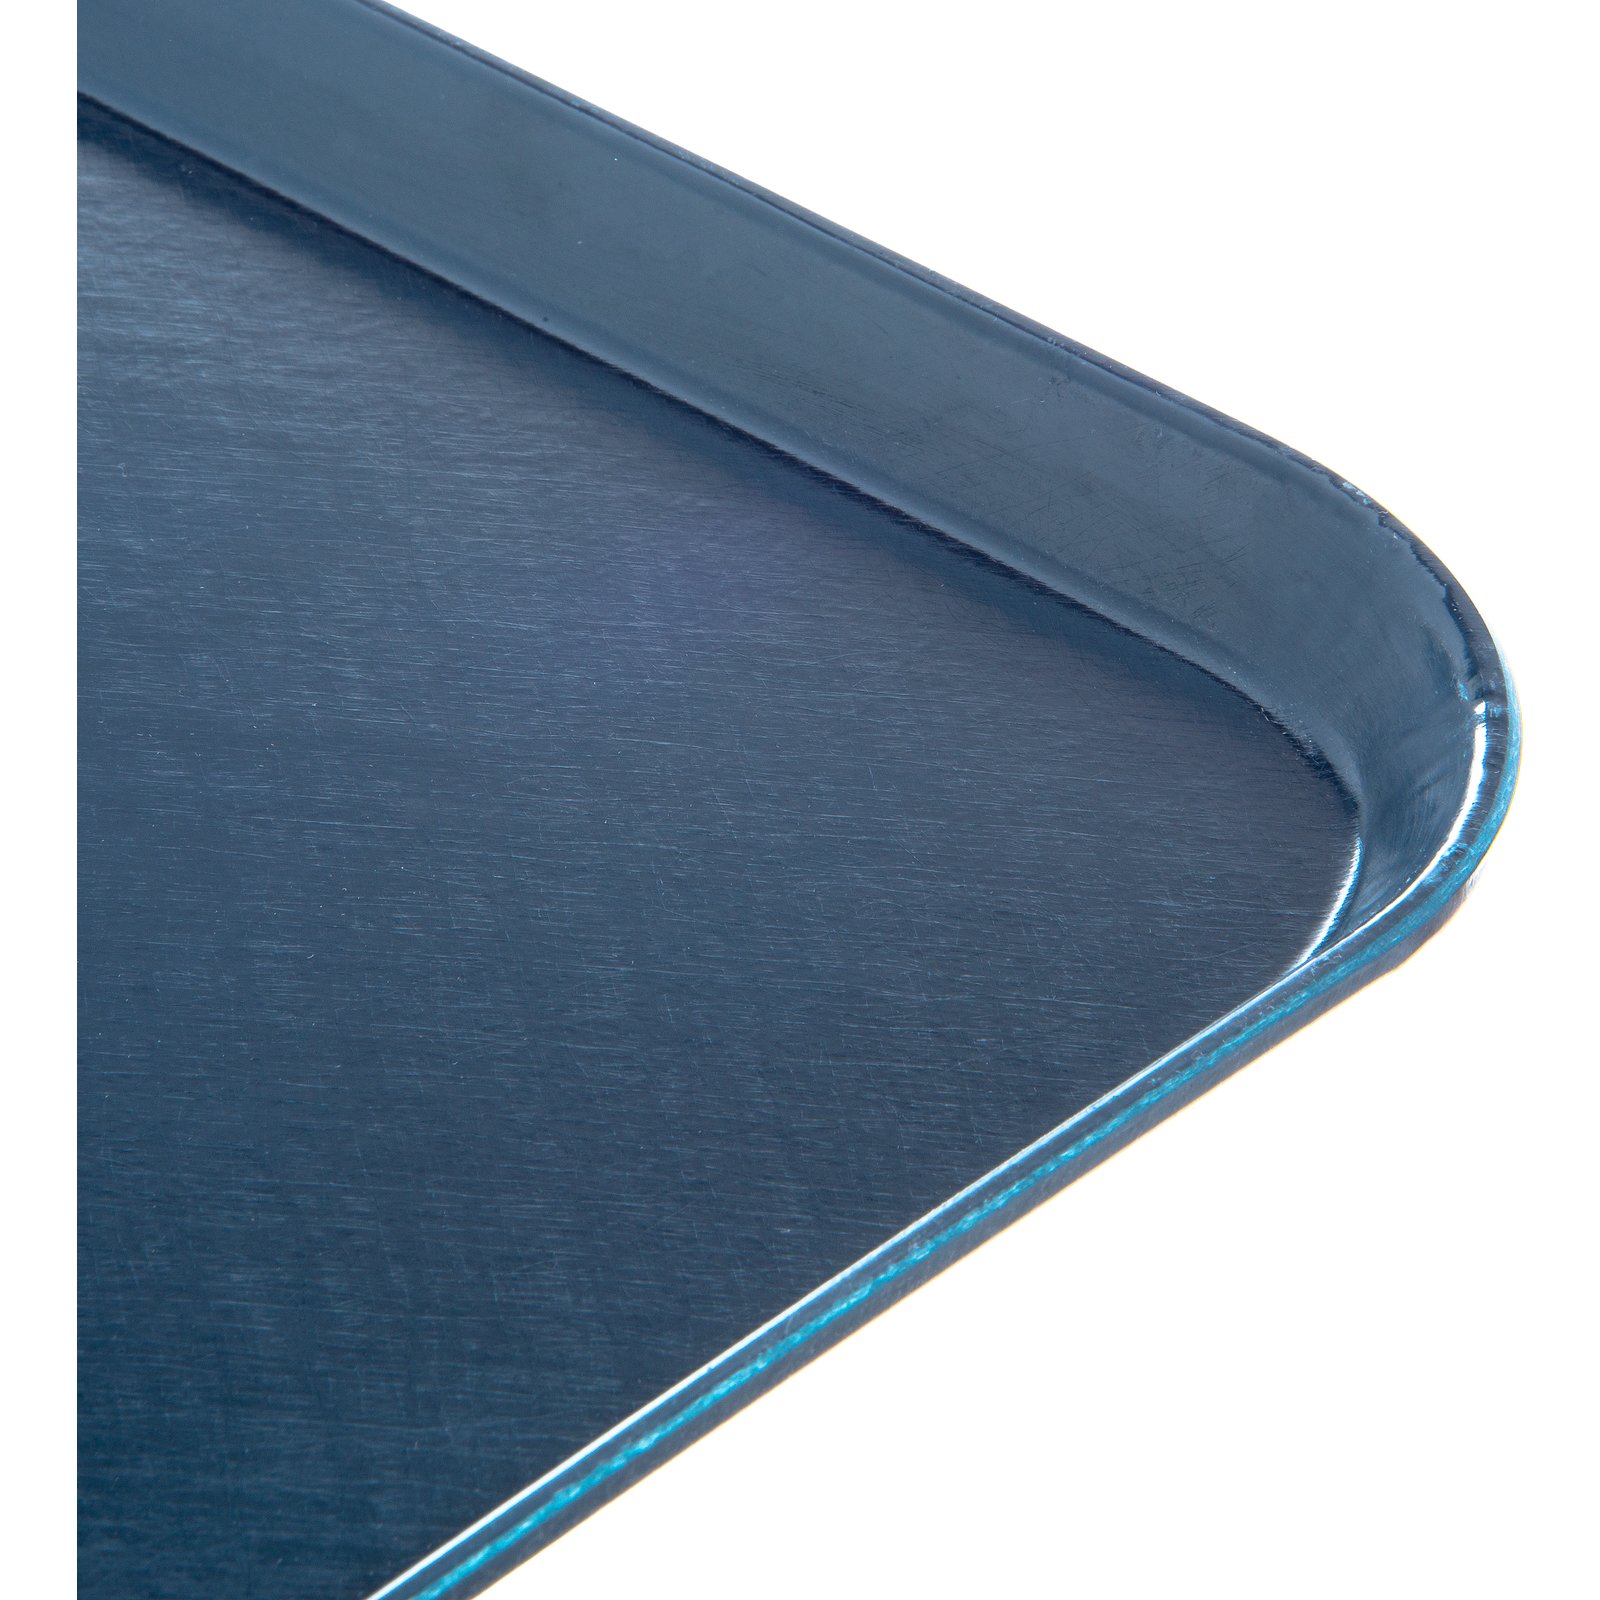 DX1089M50 - Glasteel™ Flat Tray 15 x 20' (12/cs) - Dark Blue